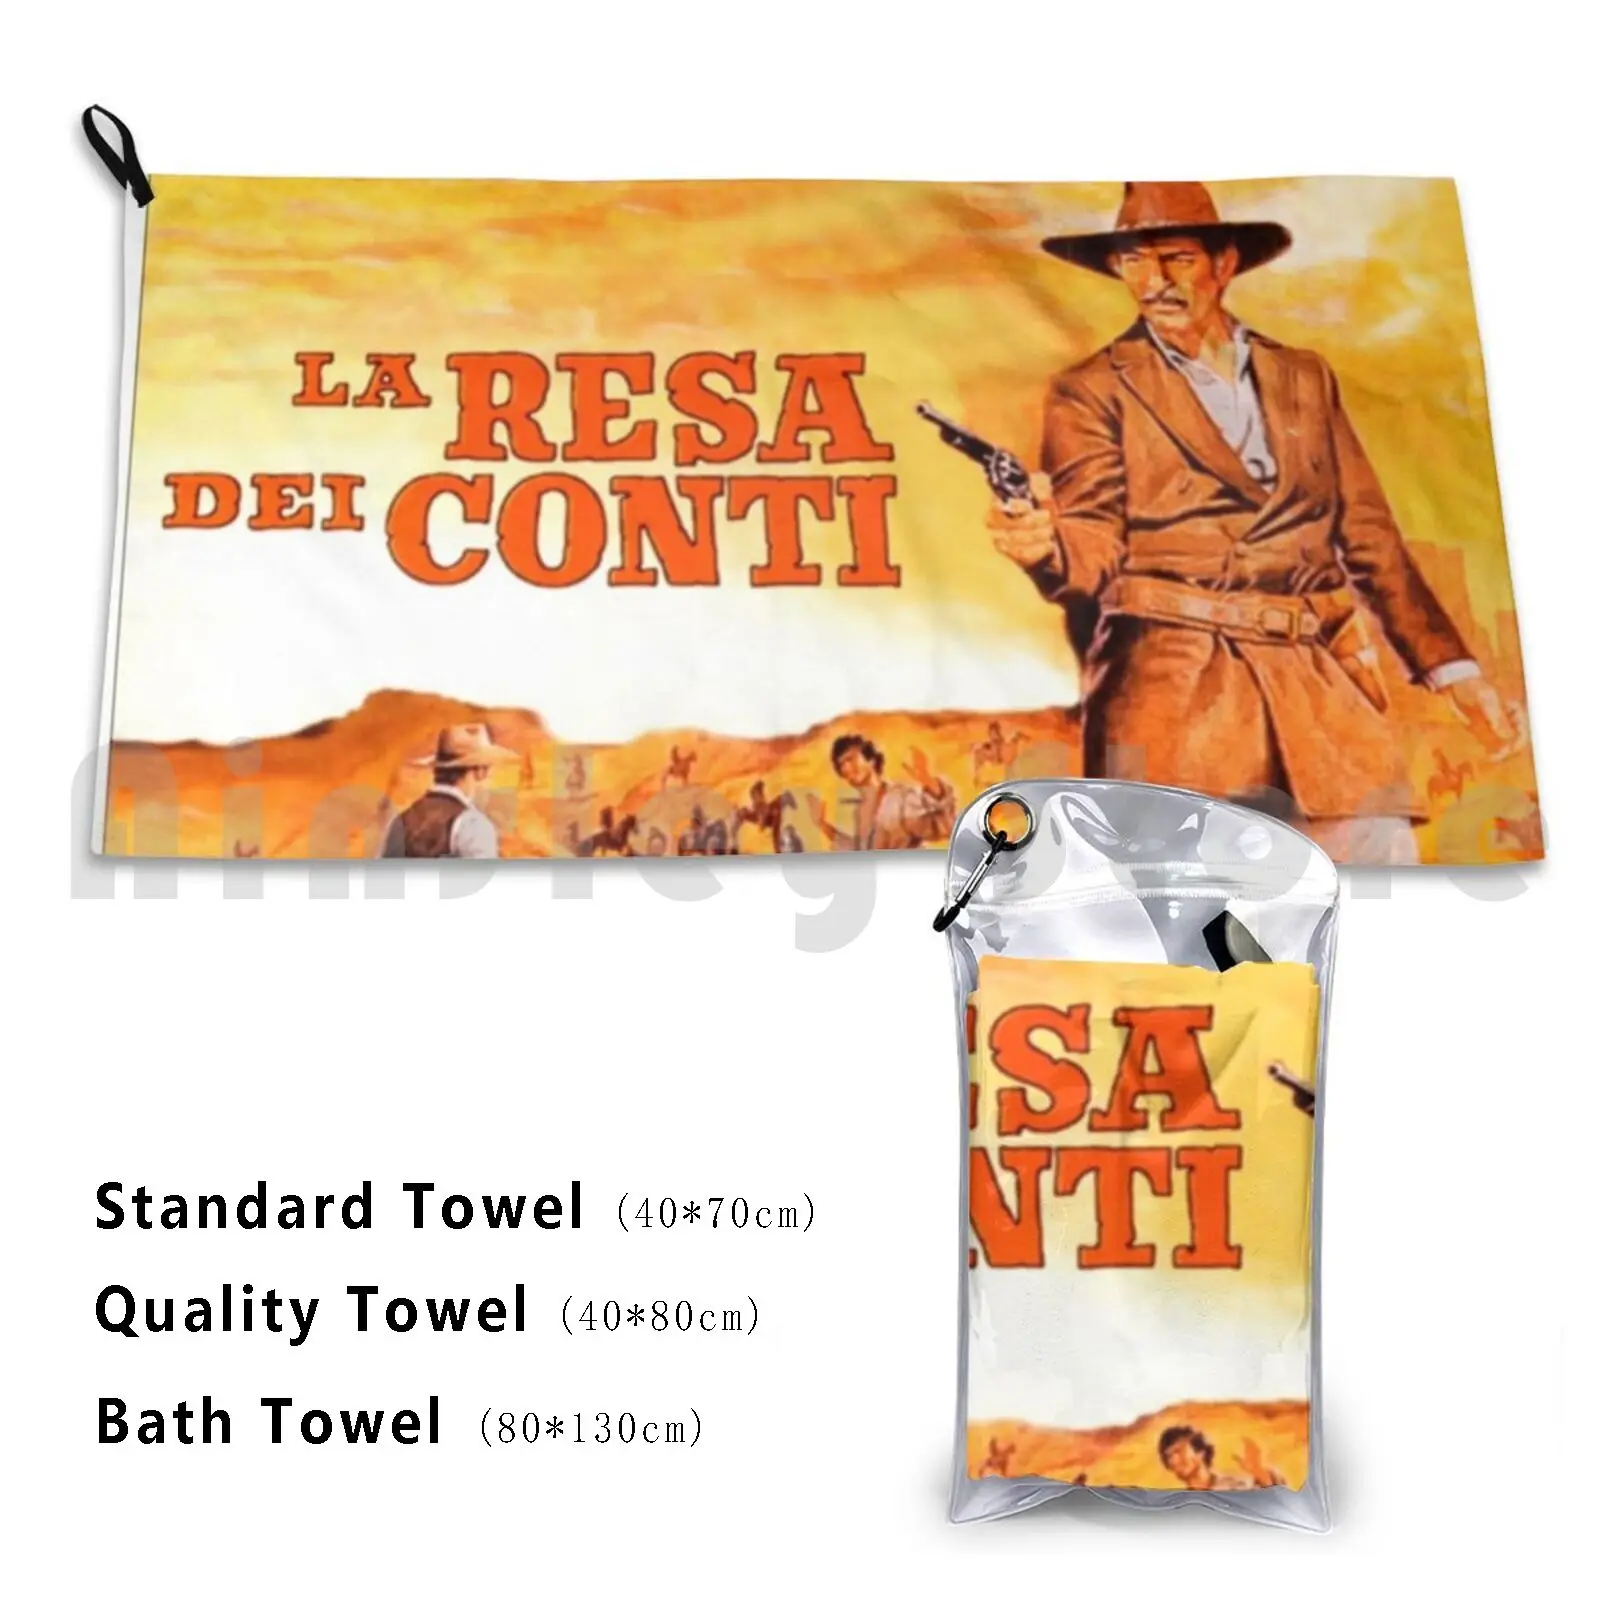 Spaghetti Western Bath Towel Beach Cushion Spaghetti Western Resa Actors Movies Italy English Ennio Morricone